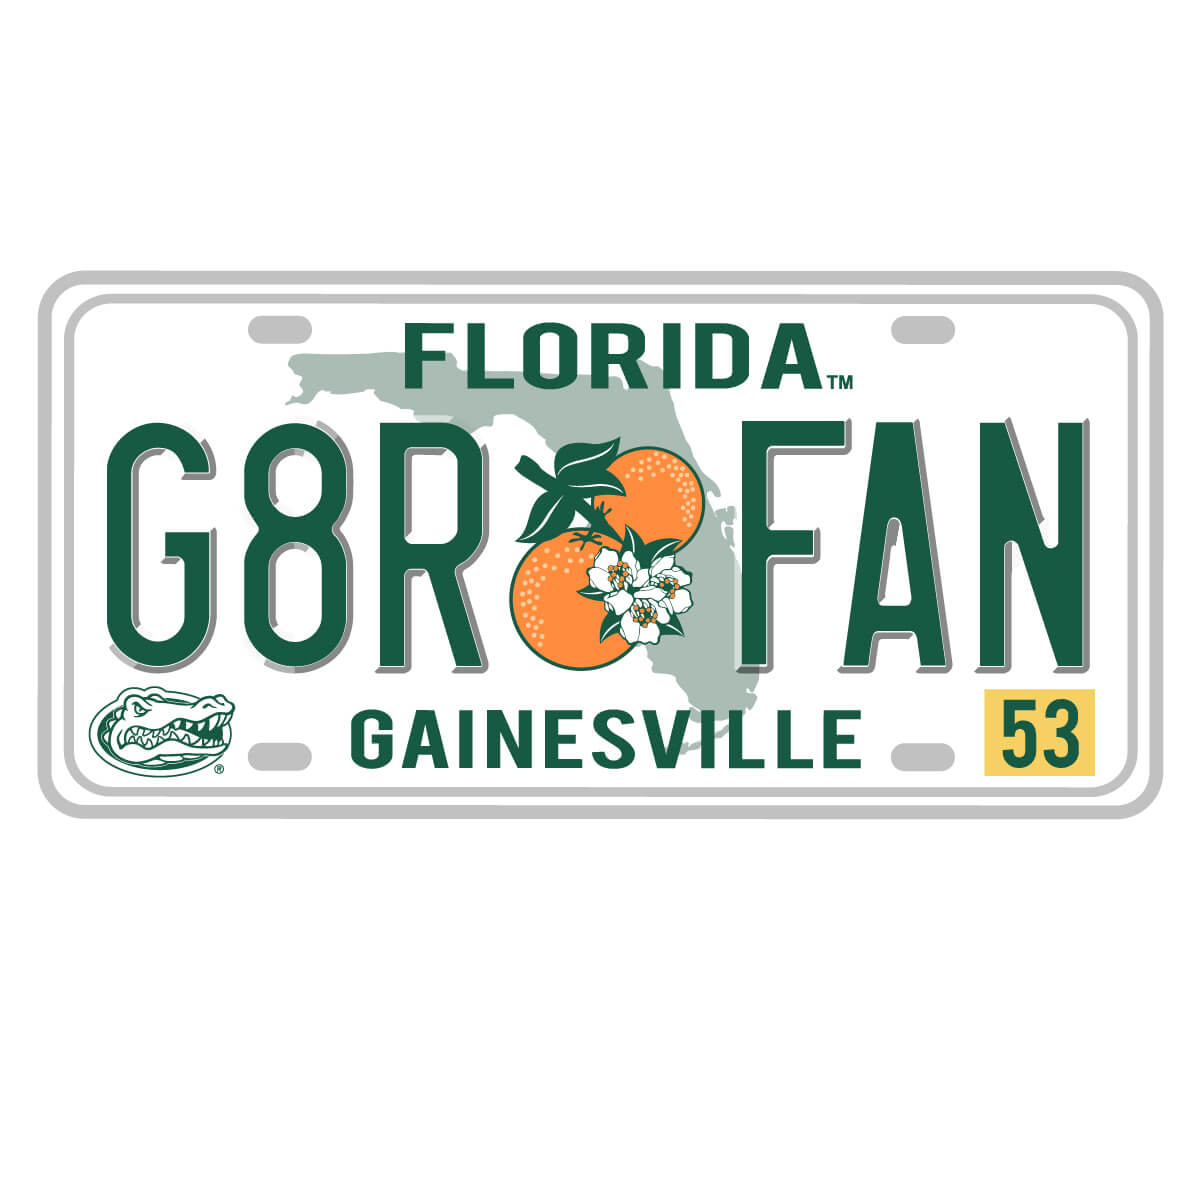 Florida Gators Florida License Plate Decal